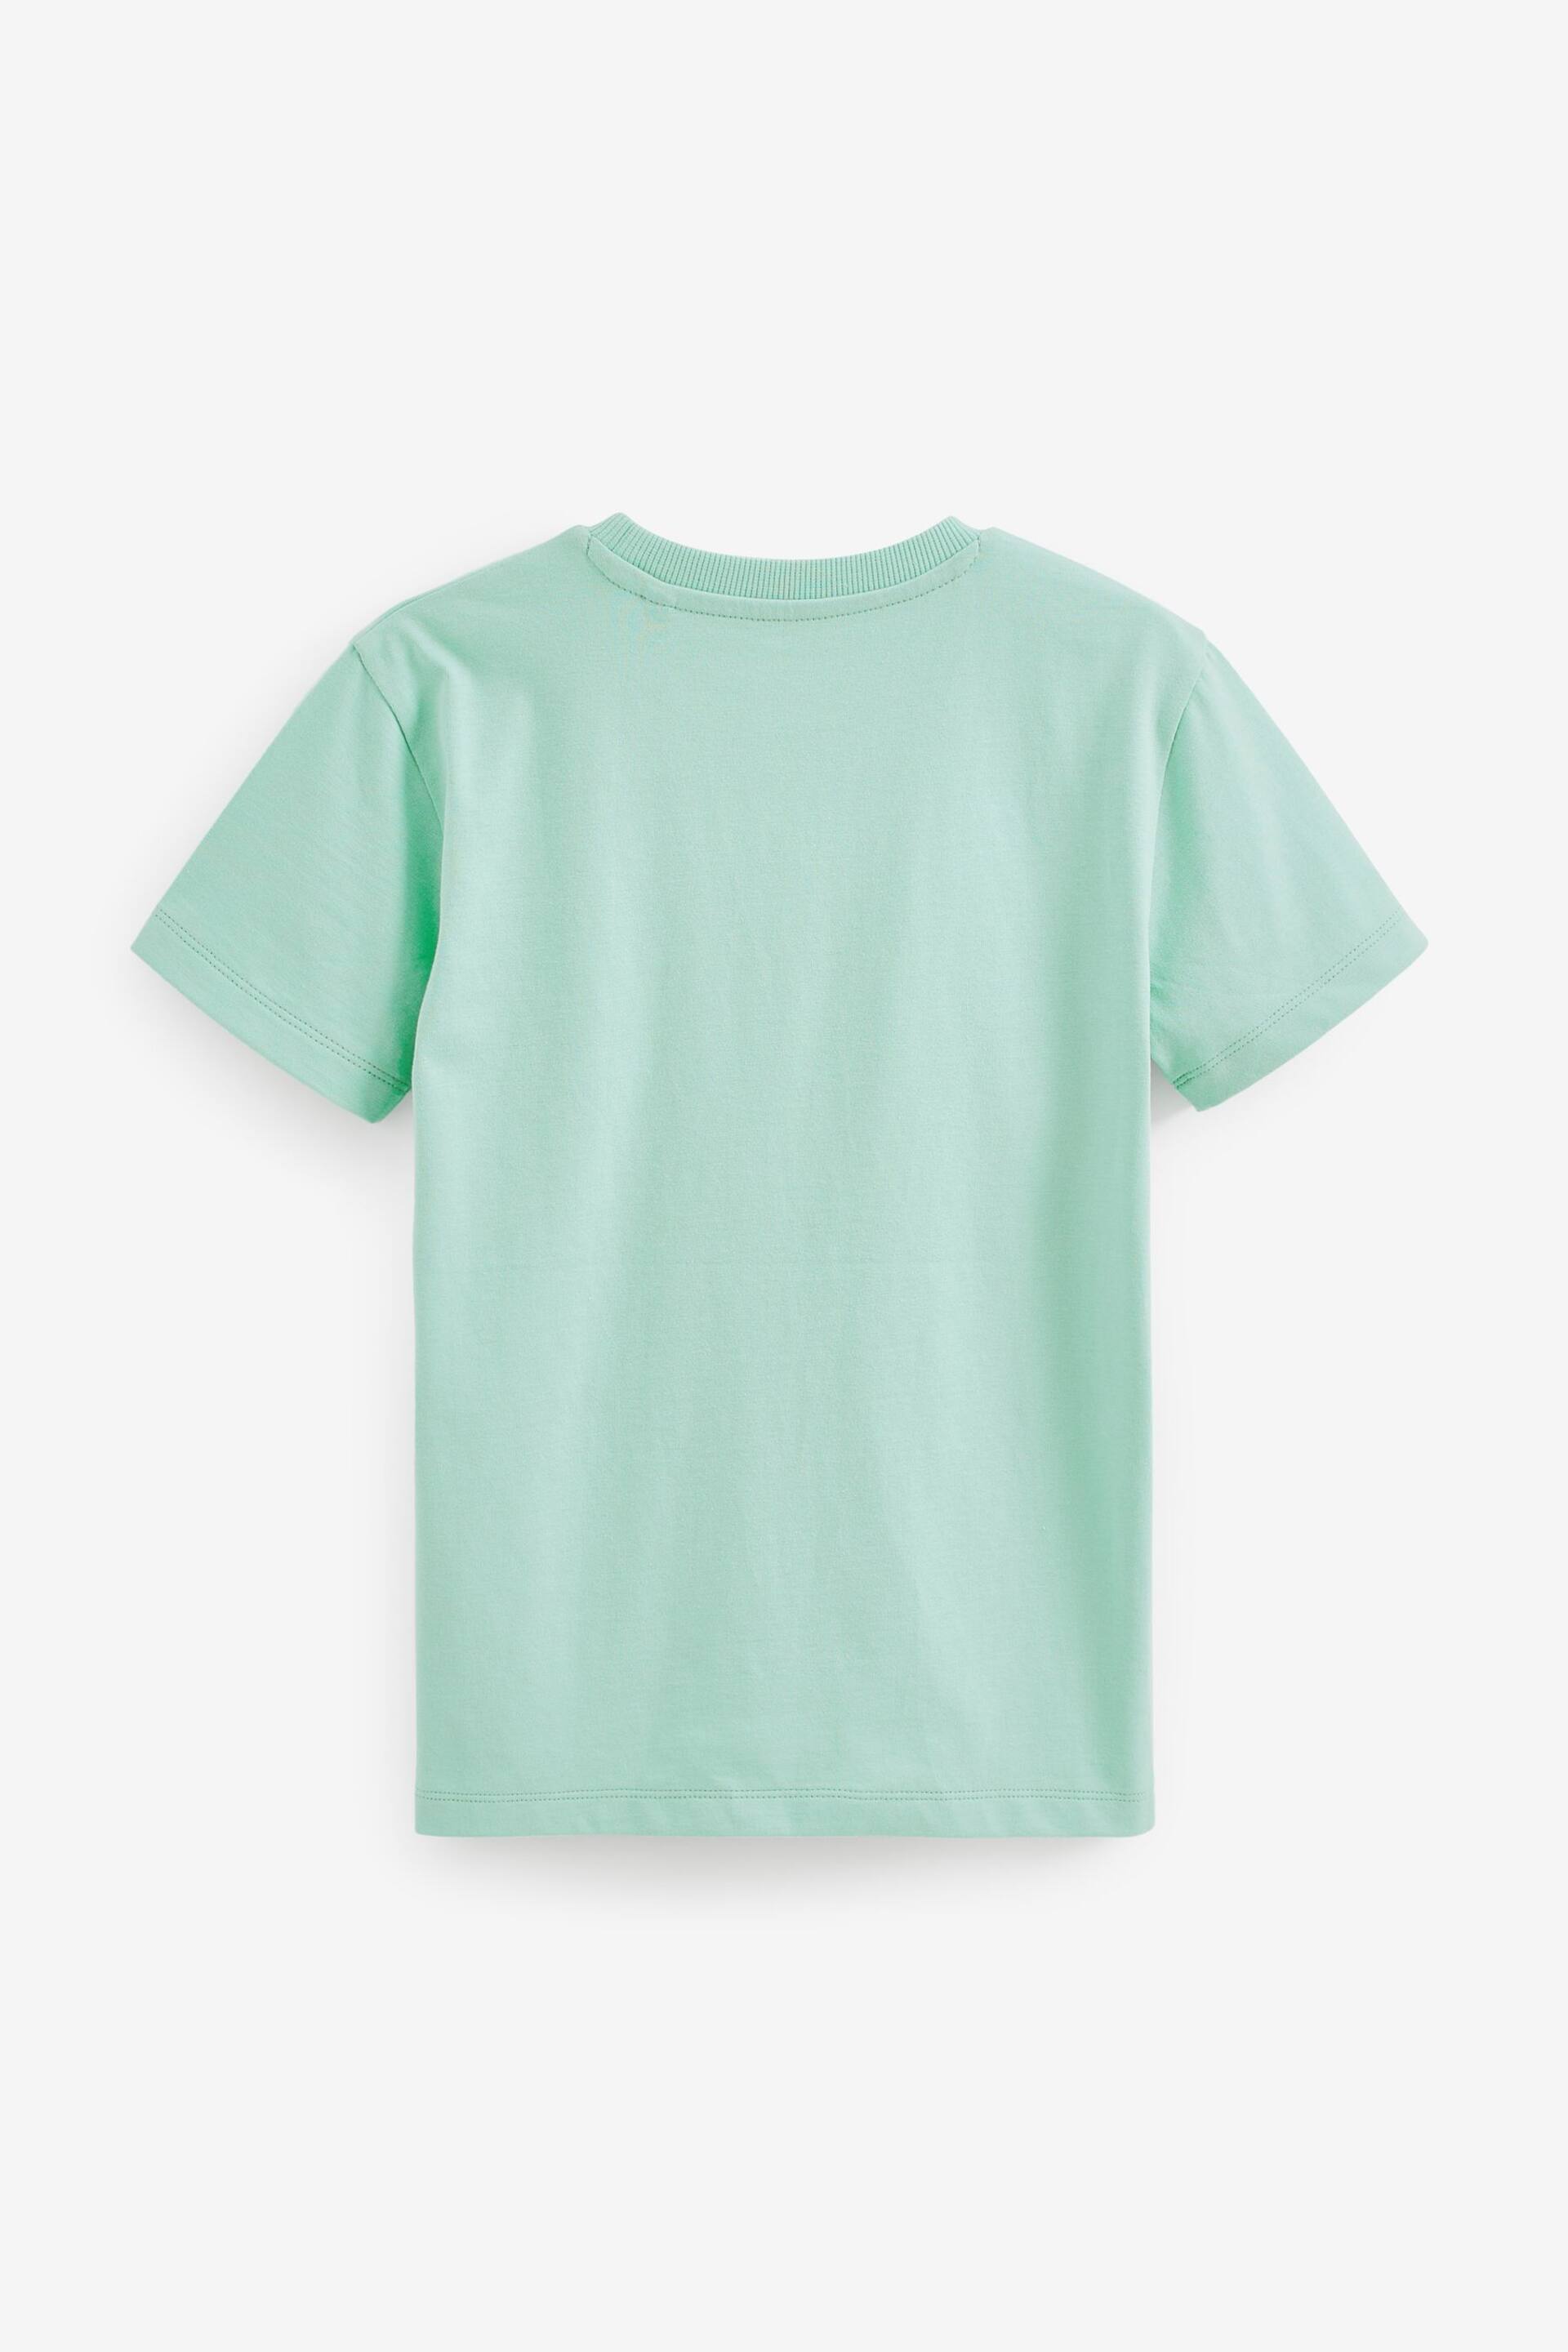 Green Mint Cotton Short Sleeve T-Shirt (3-16yrs) - Image 2 of 2